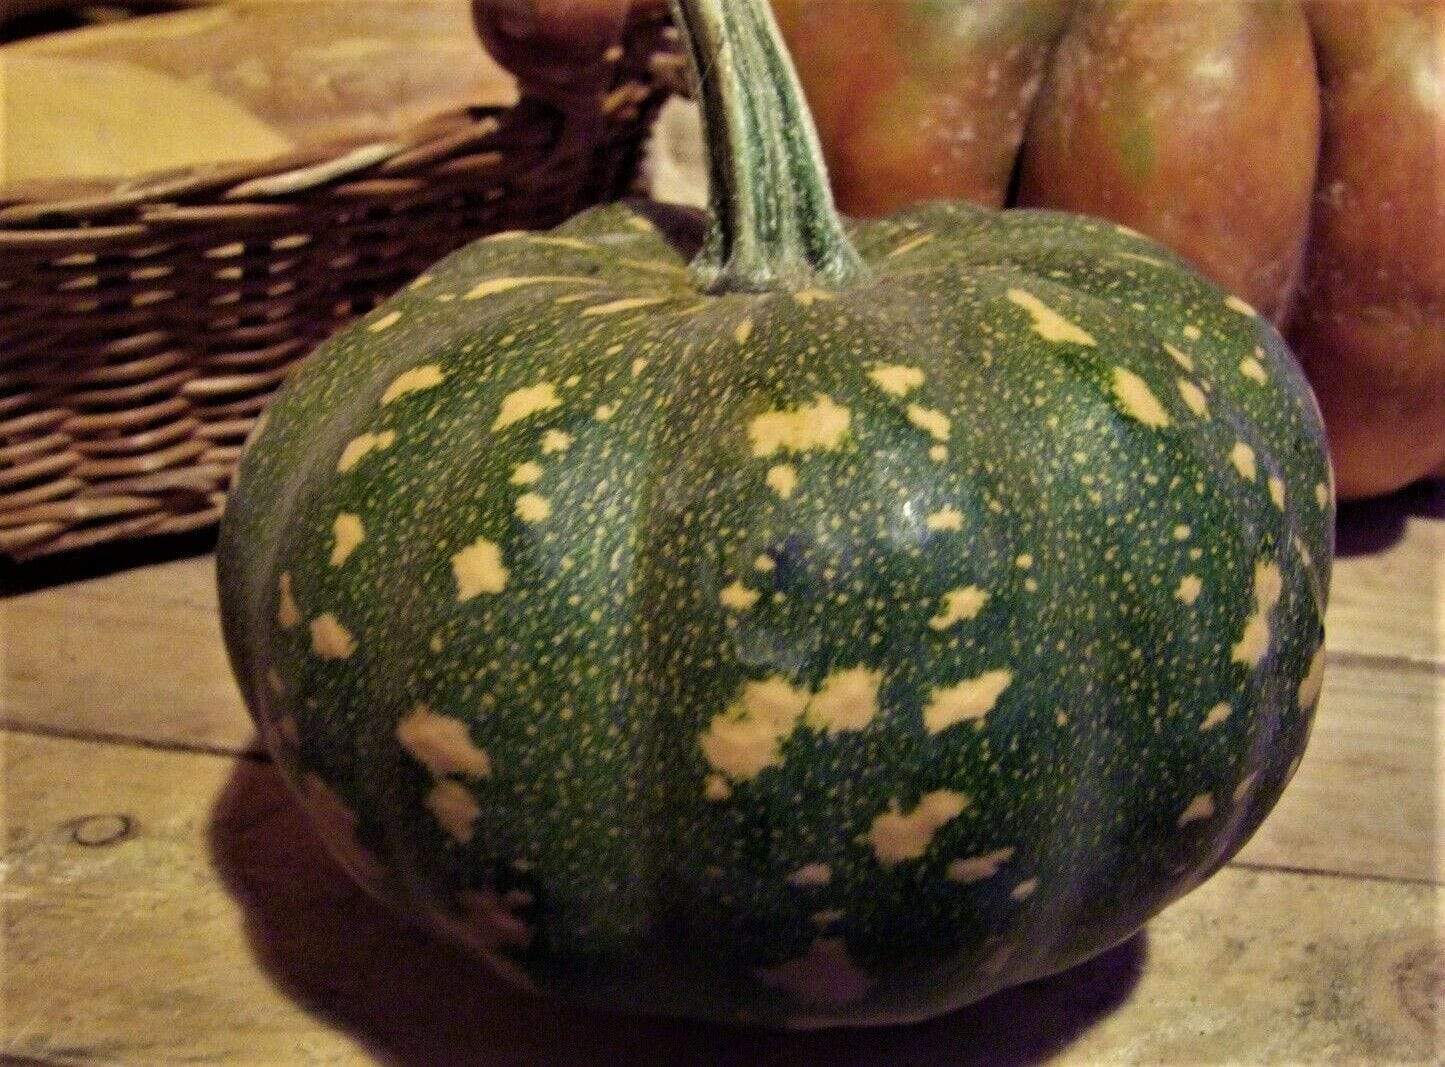 Pumpkin, Kent/ Jap - LifeForce Seeds